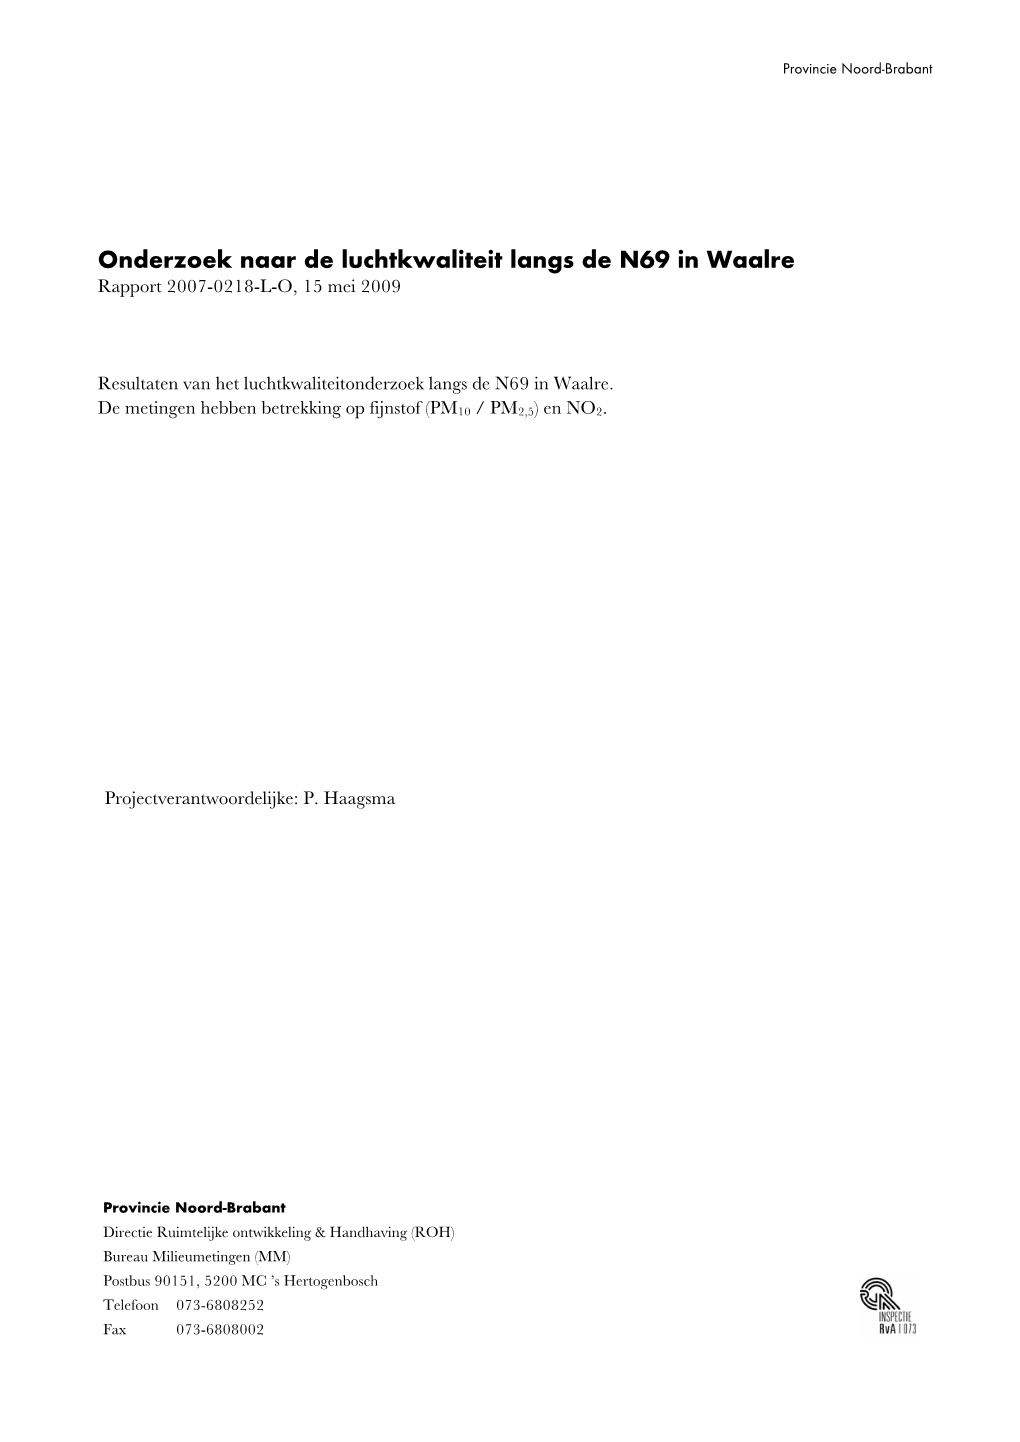 Onderzoek Naar De Luchtkwaliteit Langs De N69 in Waalre Rapport 2007-0218-L-O, 15 Mei 2009